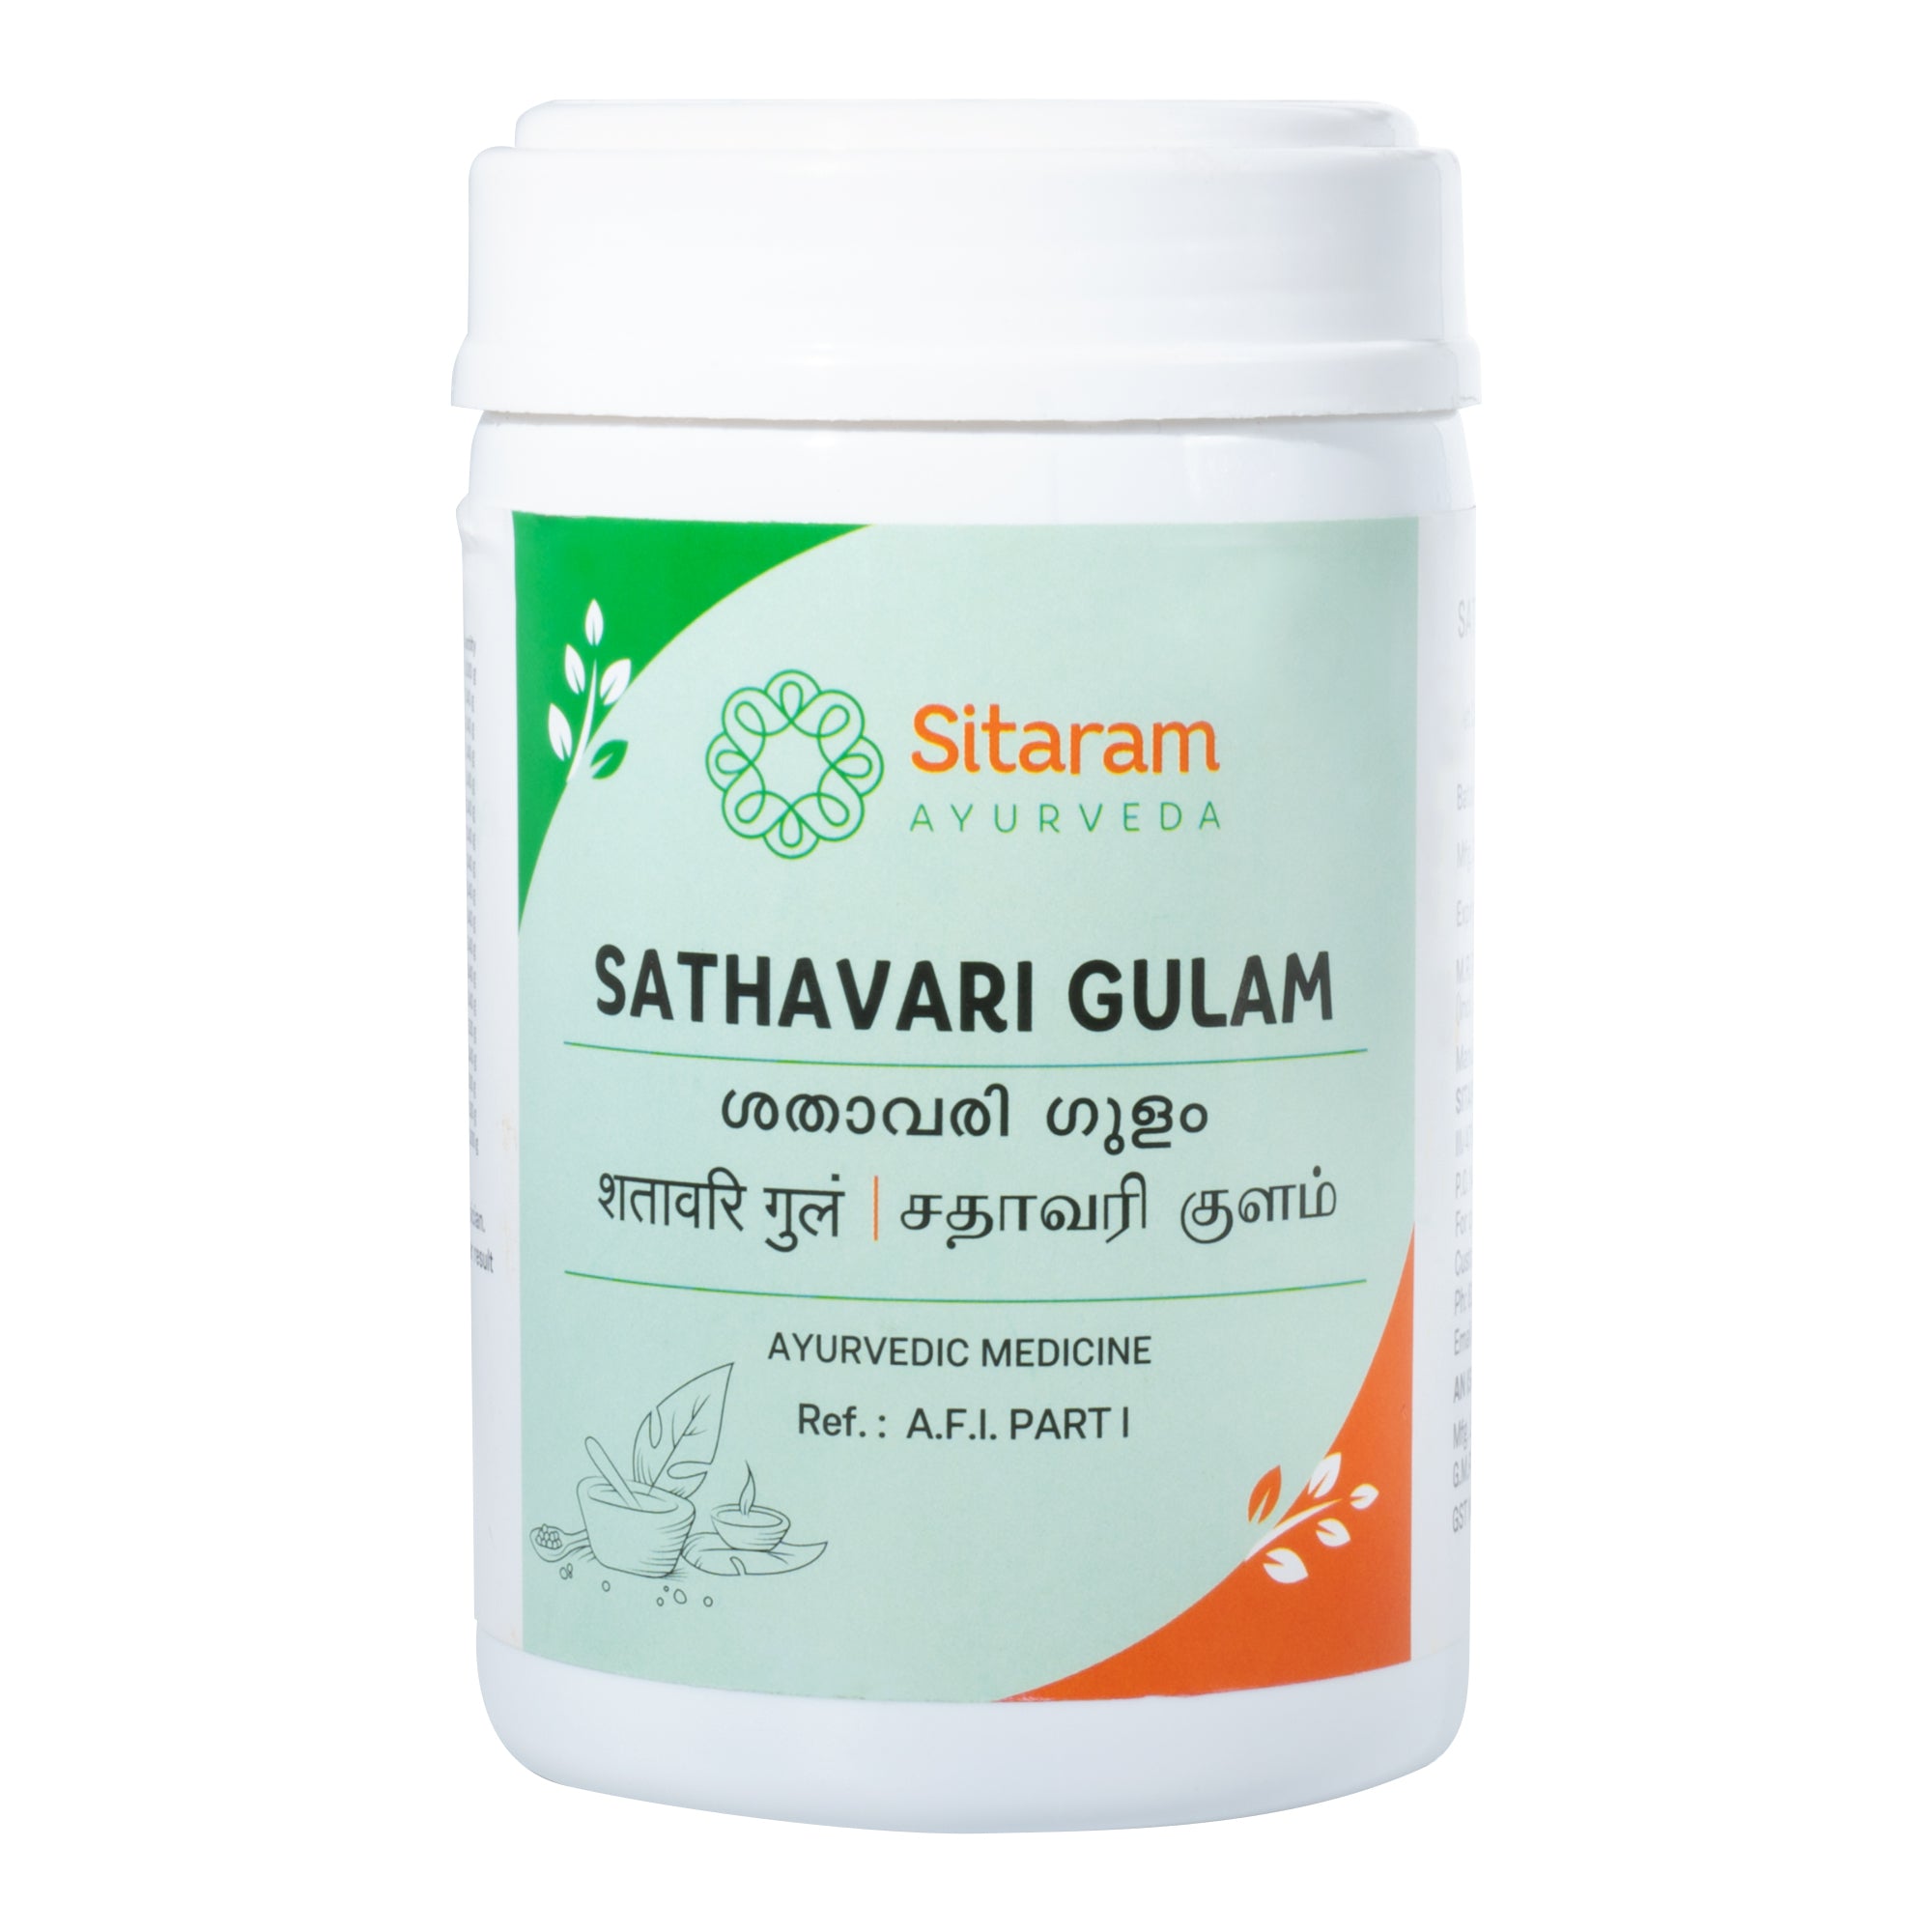 Sitaram Ayurveda Sathavari Gulam 500Gm (Prescription Medication)